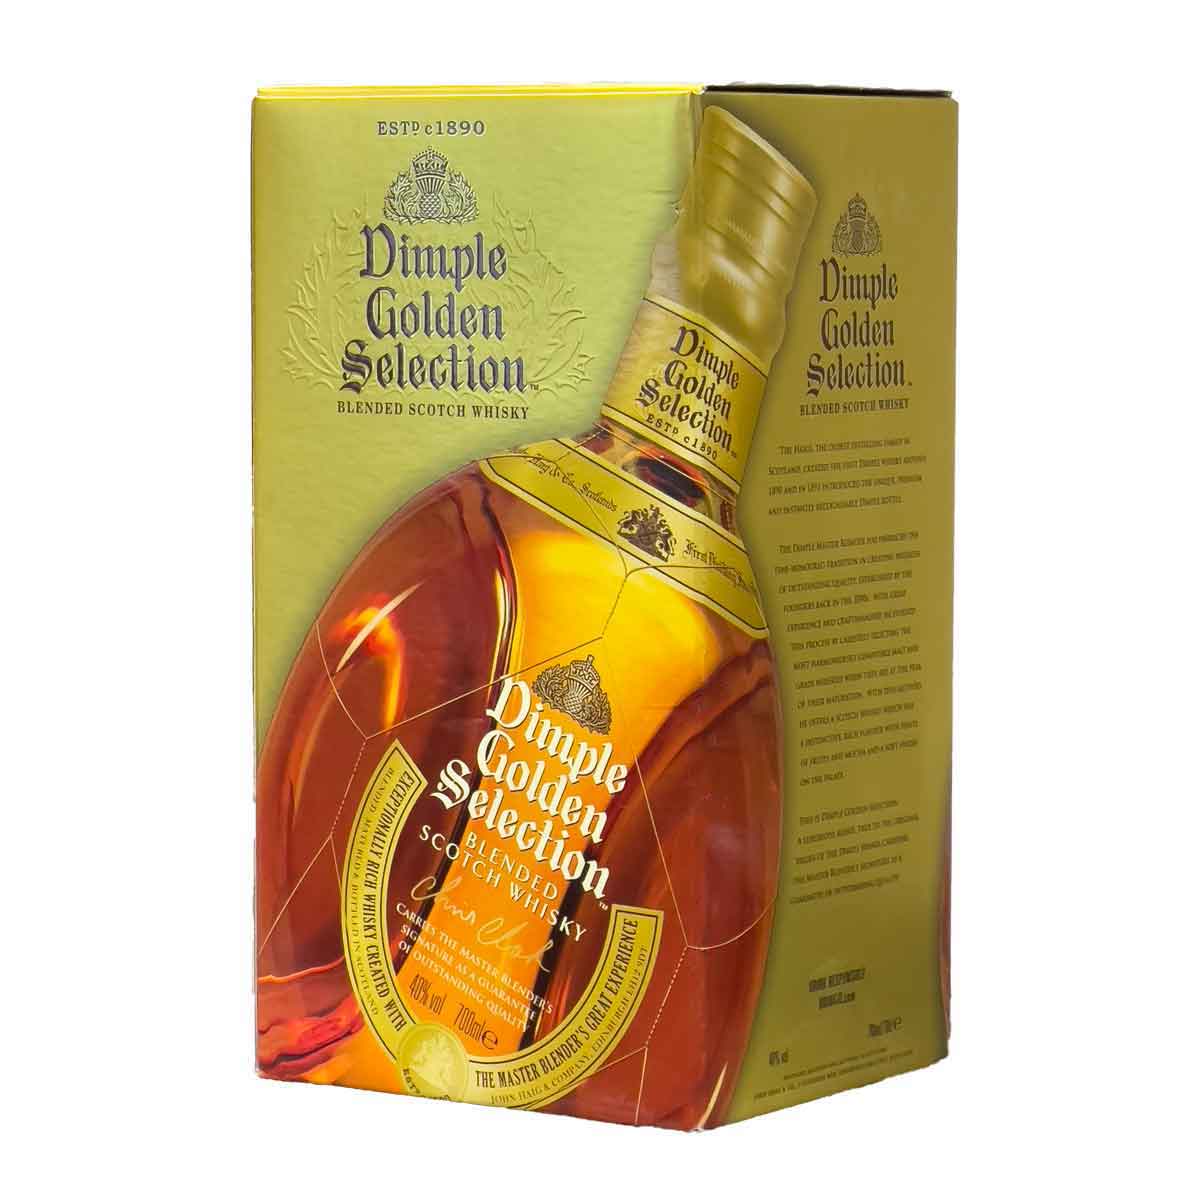 Dimple Golden Selection Blended Scotch | Whisky Potyka (0,7l) 40% Getränke-Bringdienst